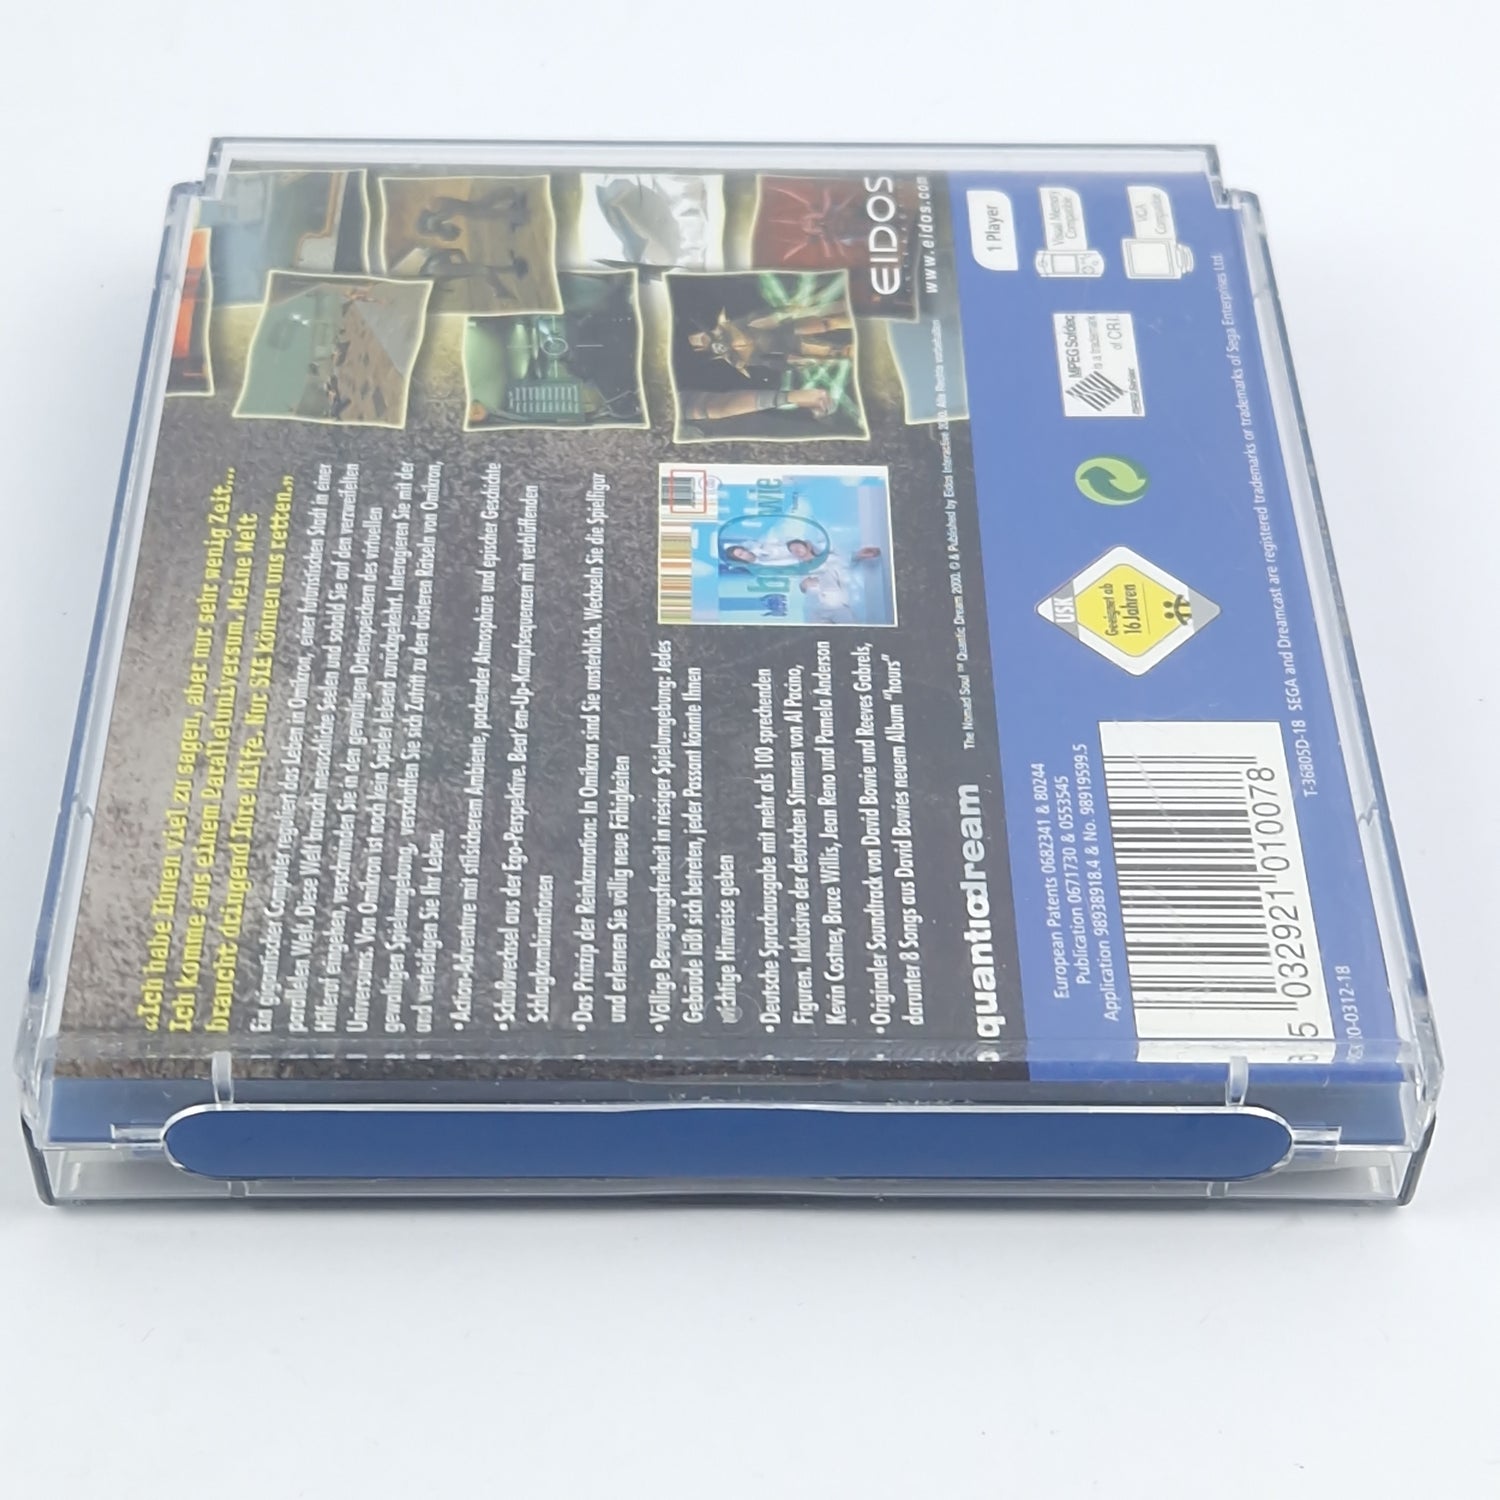 Sega Dreamcast Spiel : The Normad Soul - CD Anleitung OVP cib / DC PAL